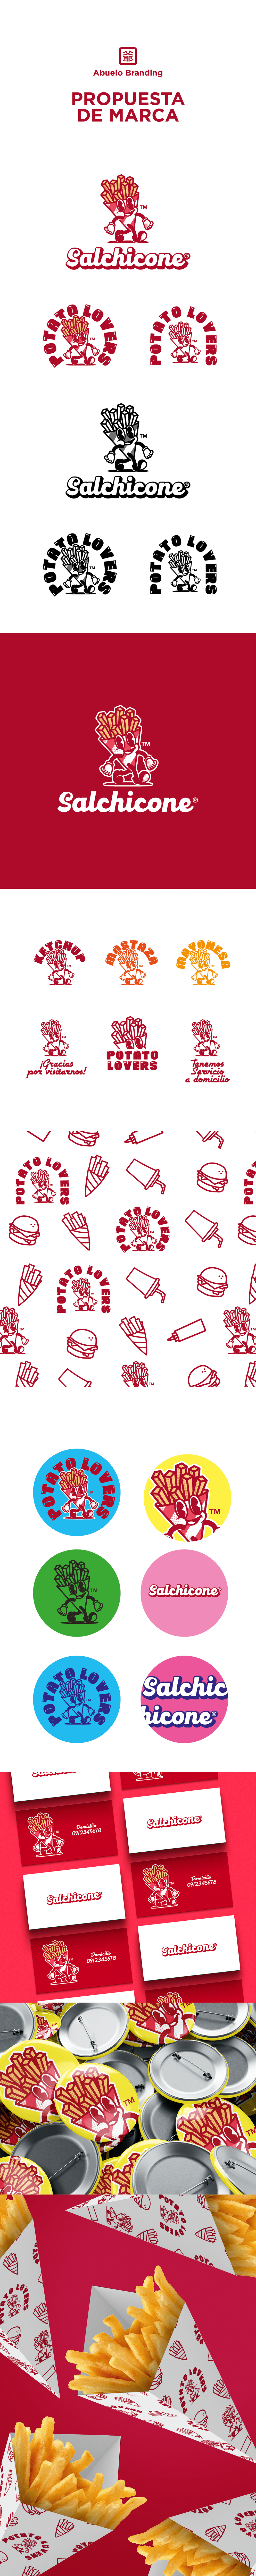 comida rápida fastfood french fries logo logoideas Logotipo Logotype old rubberhose vintage